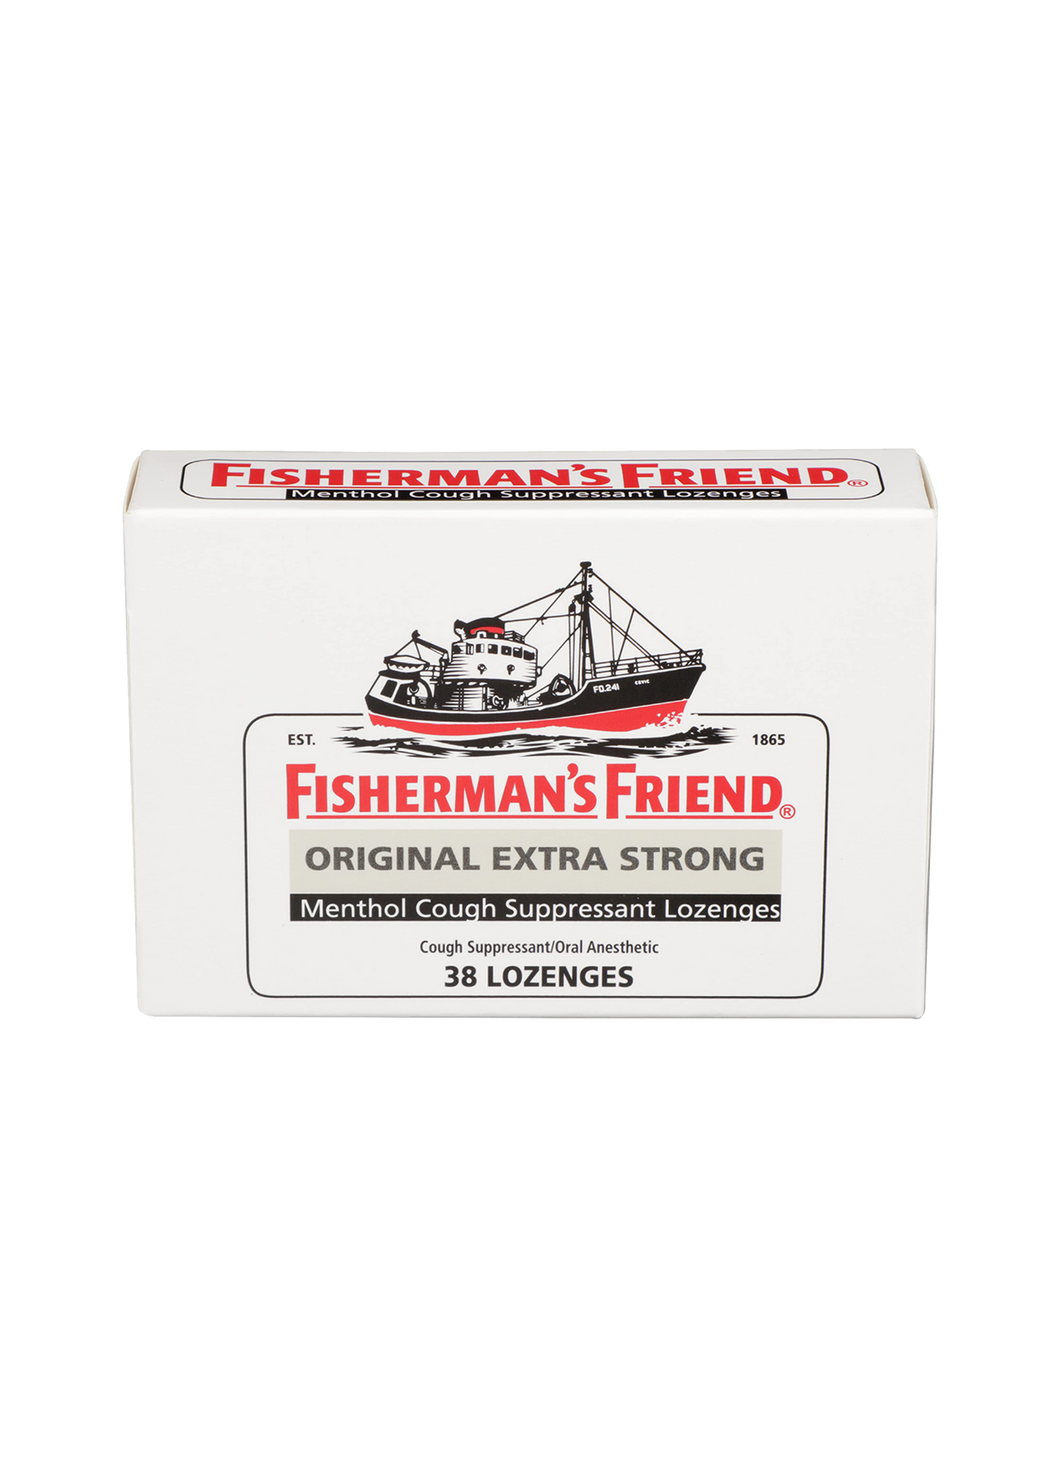 Fisherman's Friend Menthol Cough Suppressant Original Extra Strong 38 Lozenges